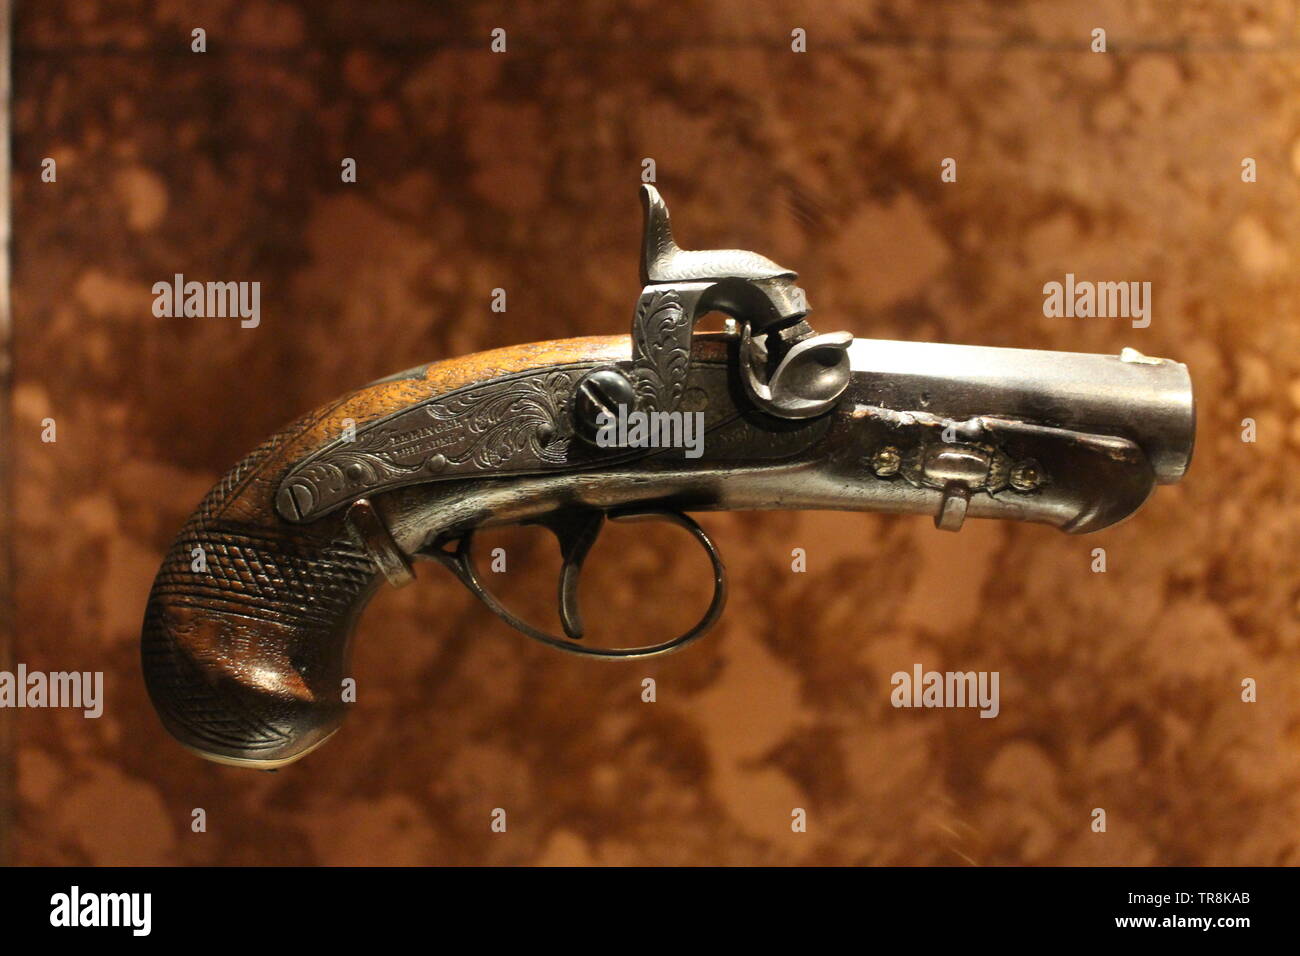 Derringer Pistol Immagini e Fotos Stock - Alamy